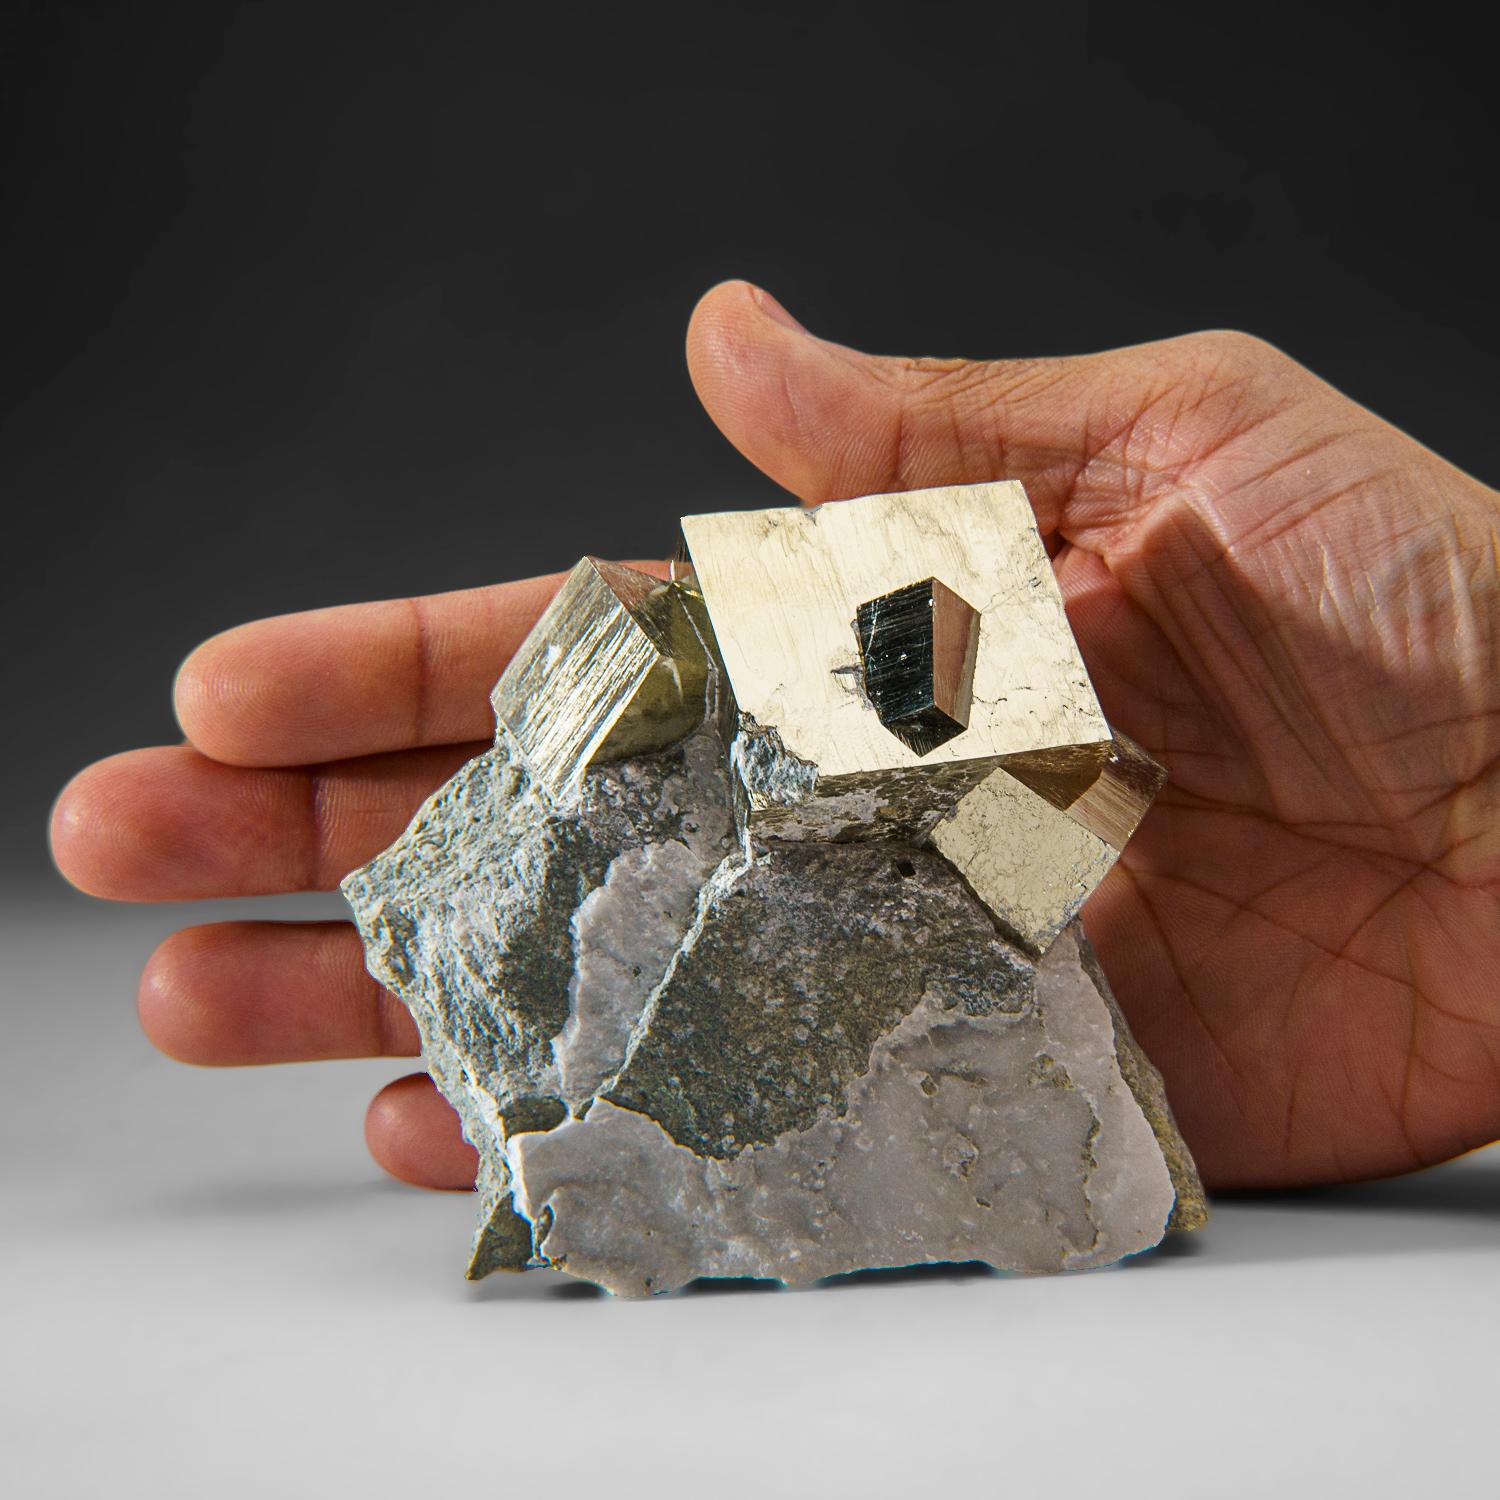 Spanish Pyrite Cube on Basalt from Navajún, La Rioja Province, Spain (1.2 lbs) For Sale